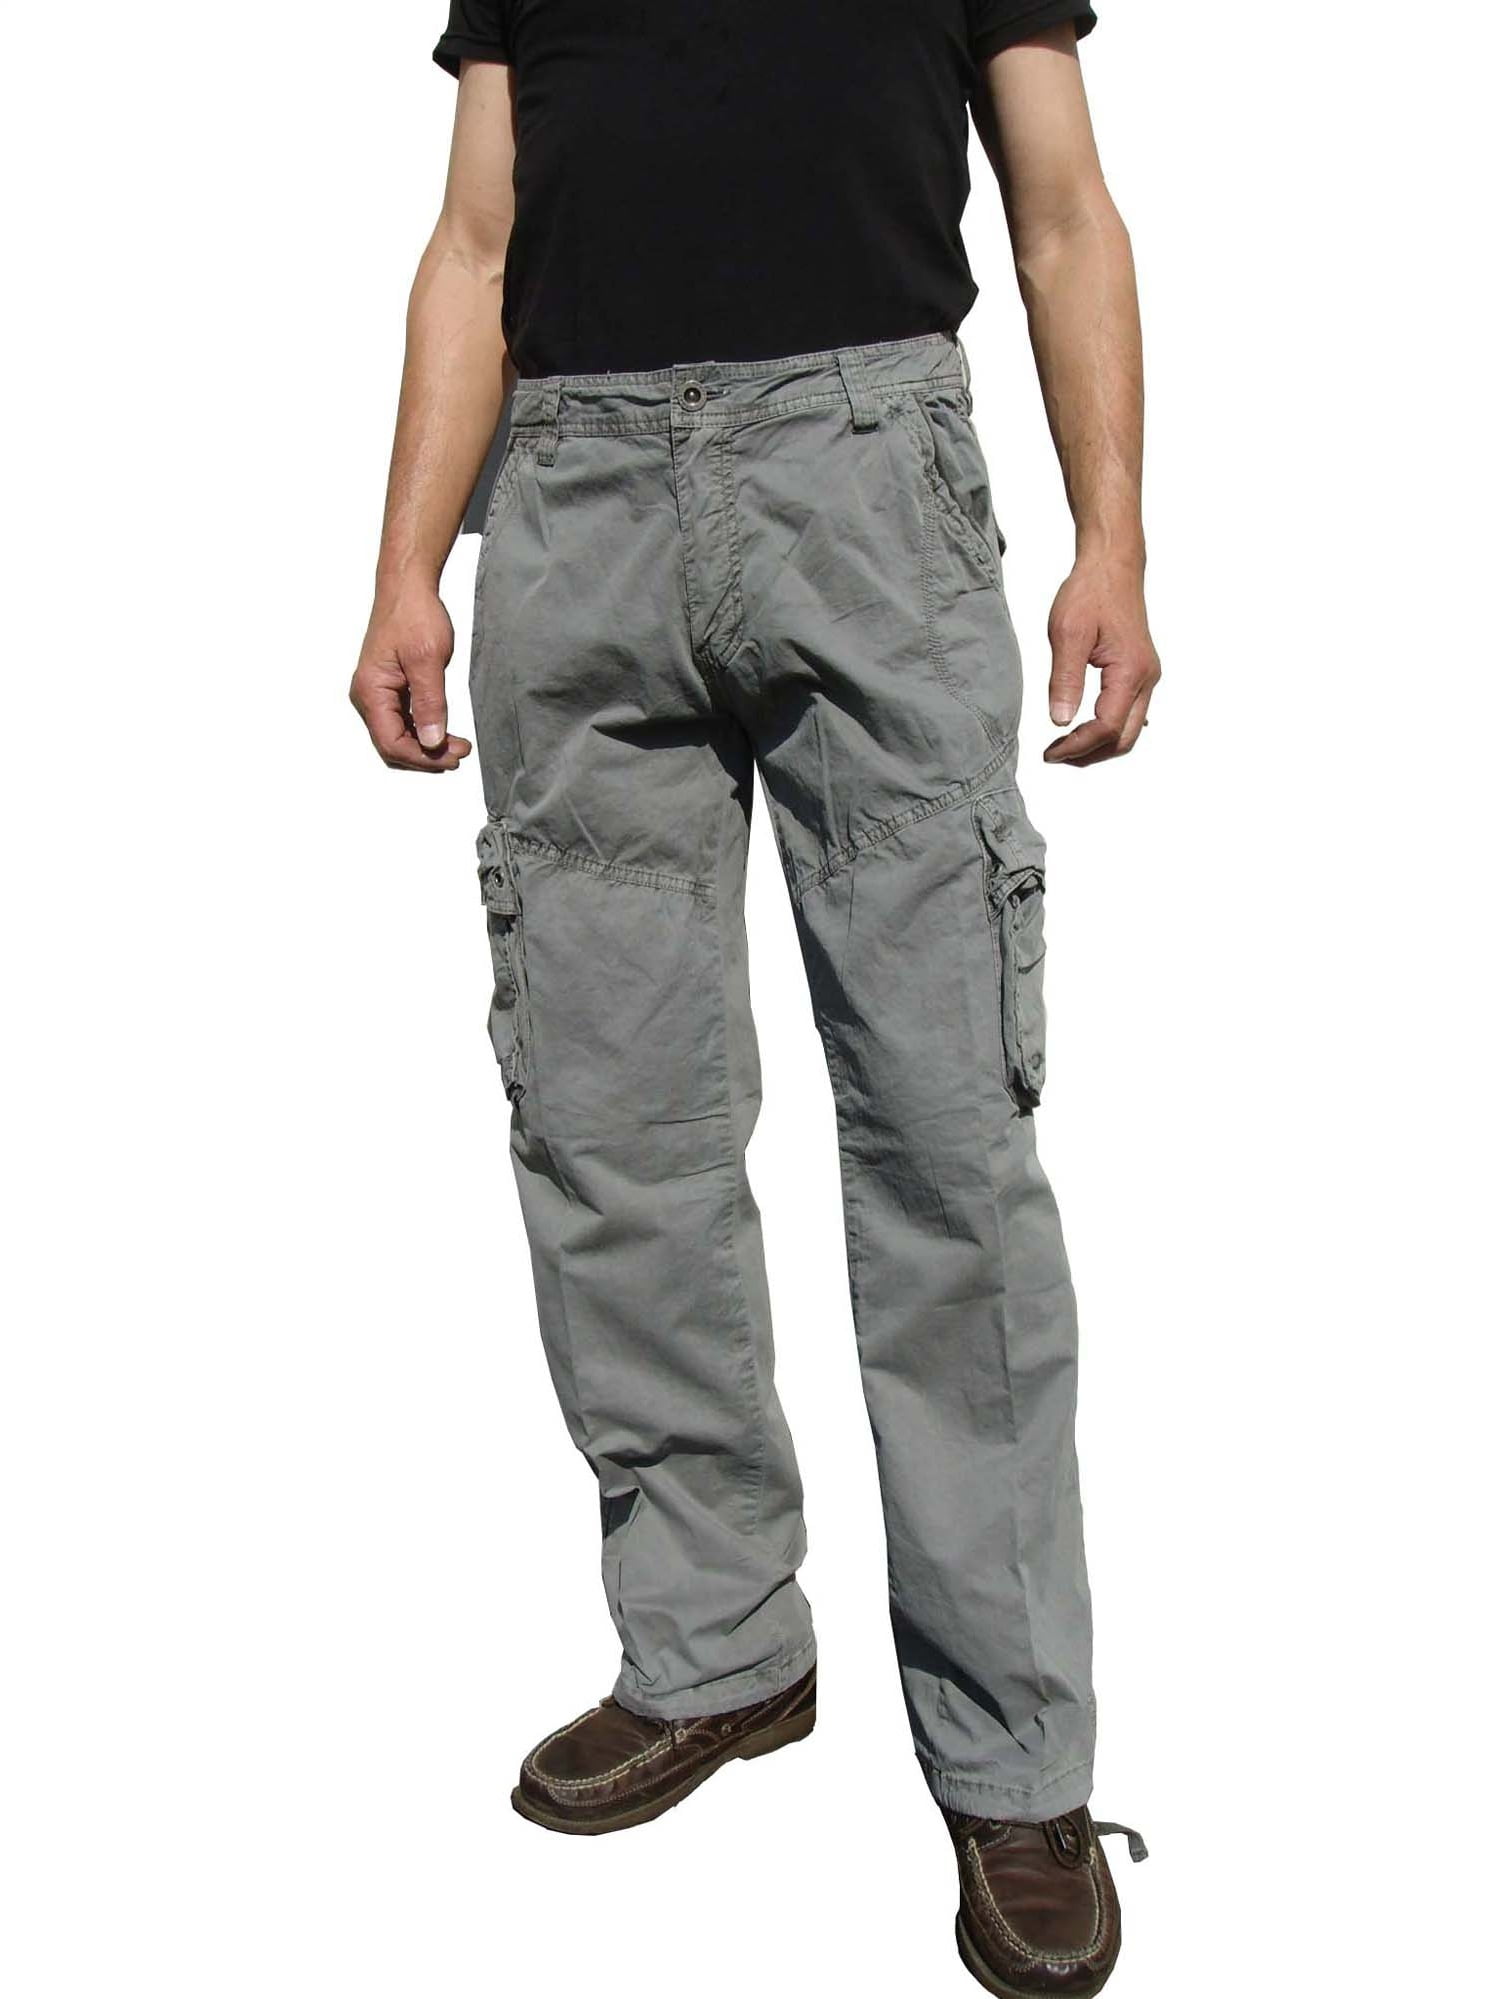 Mens Military-Style Grey Color Cargo Pants 27_38x33 - Walmart.com ...